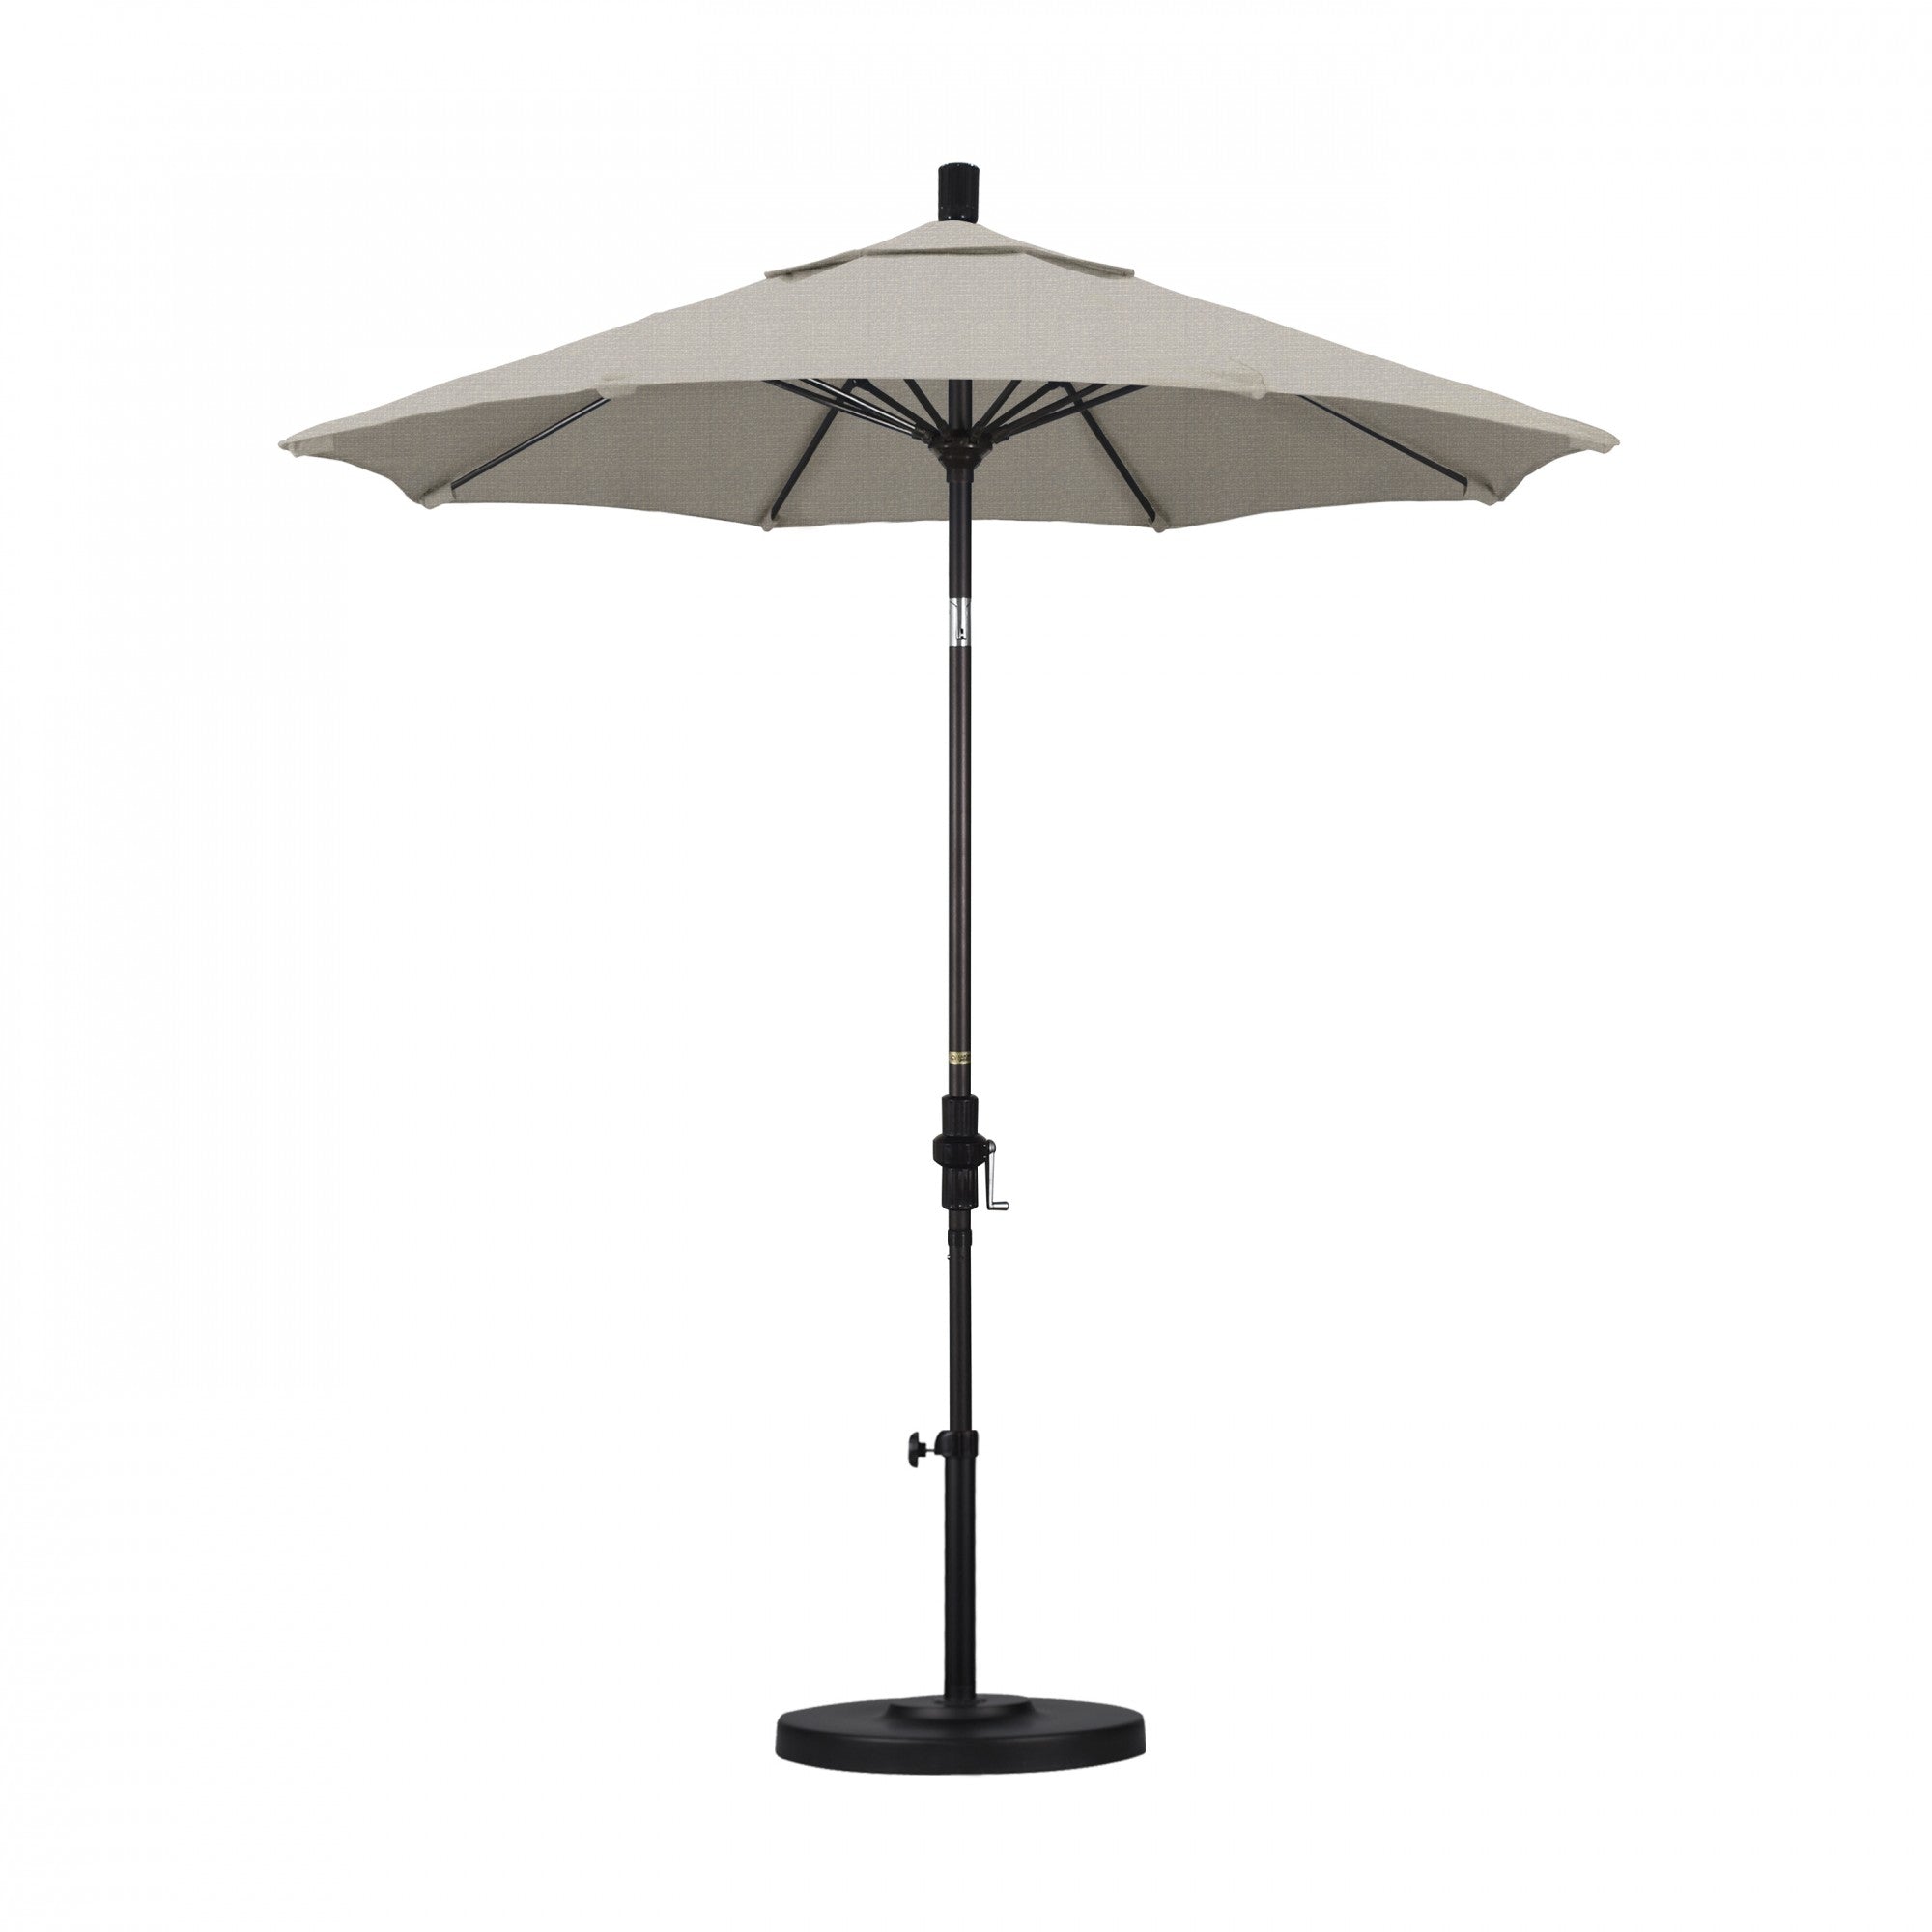 California Umbrella - 7.5' - Patio Umbrella Umbrella - Aluminum Pole - Woven Granite - Olefin - GSCUF758117-F77